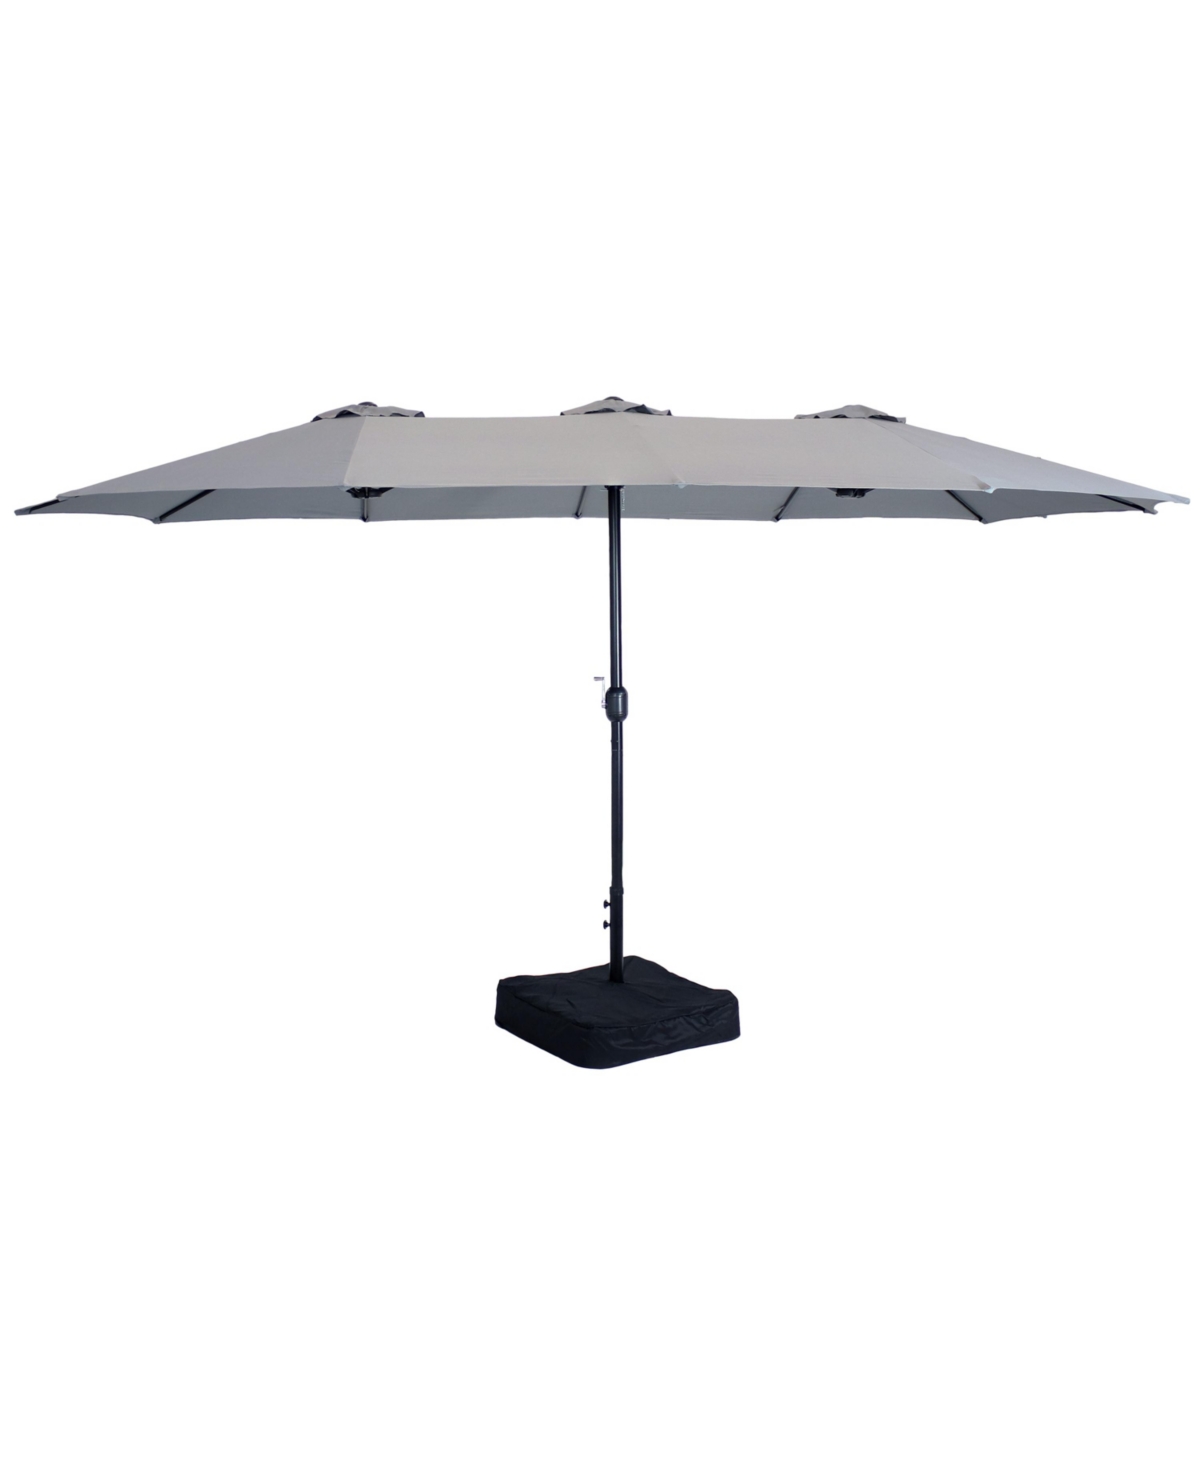 15 ft Steel Double-Sided Patio Umbrella with Sandbag Base - Gray - Grey